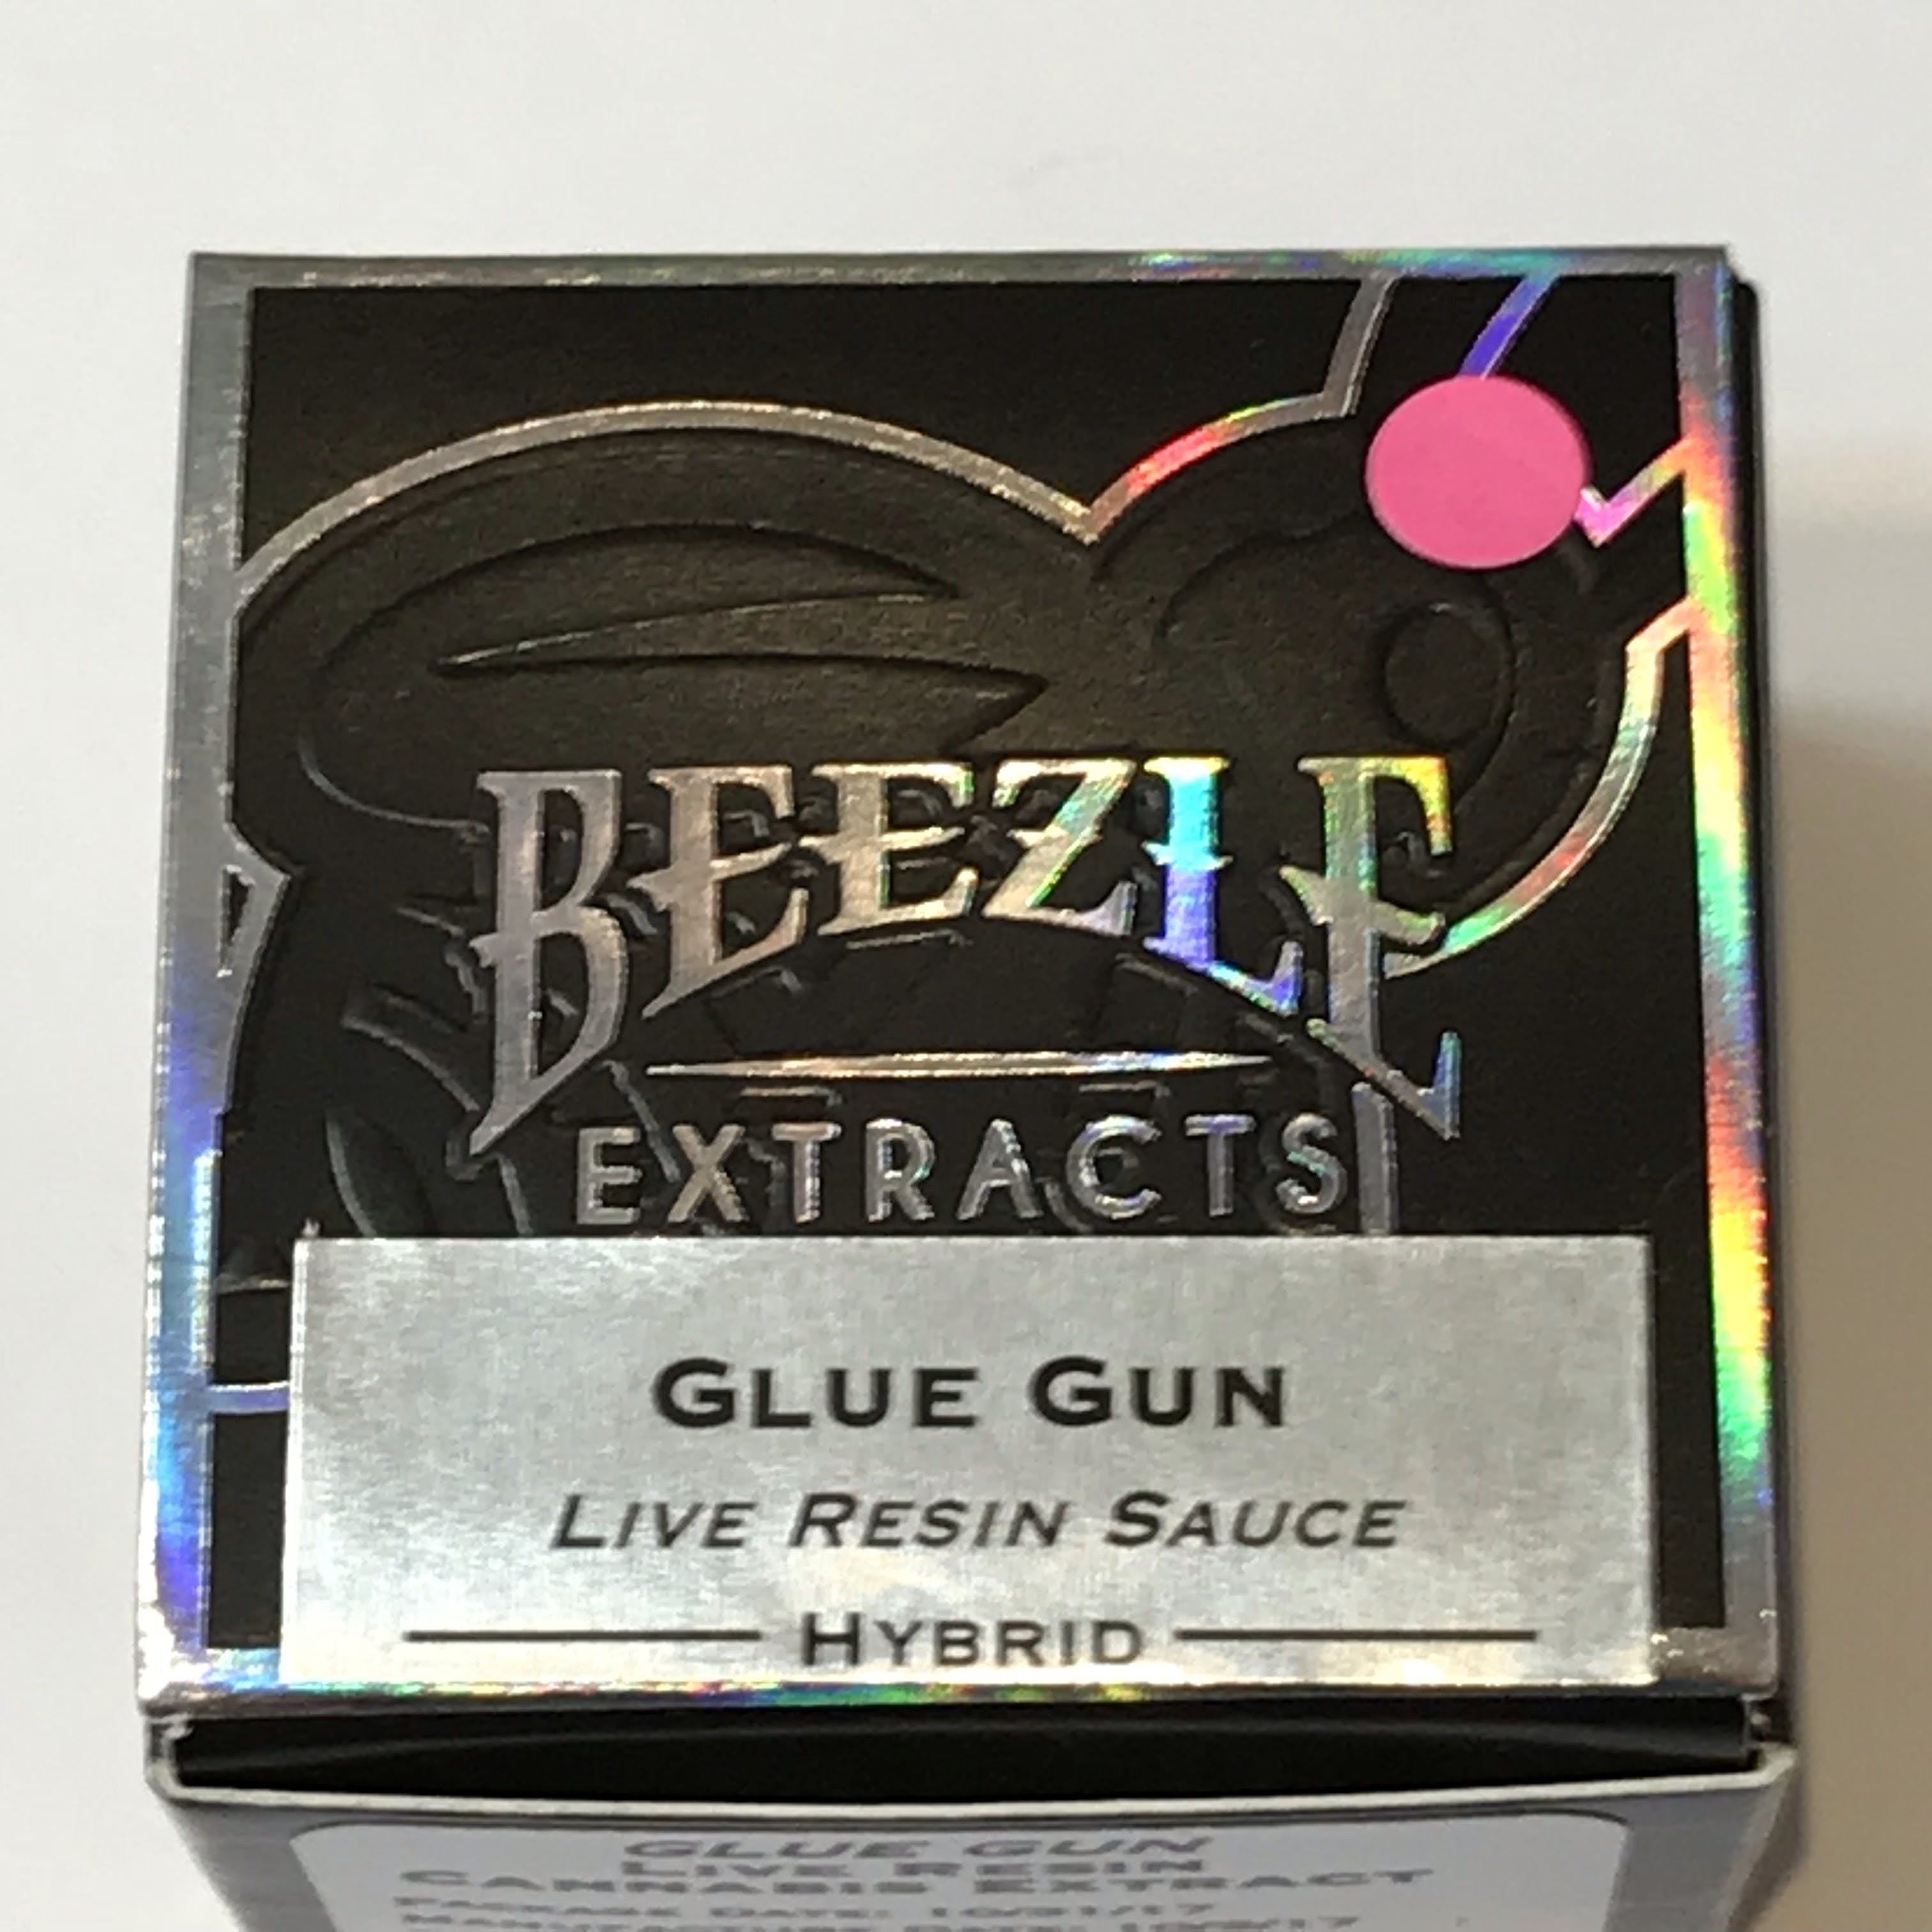 Beezle Glue Gun Live Resin Sauce